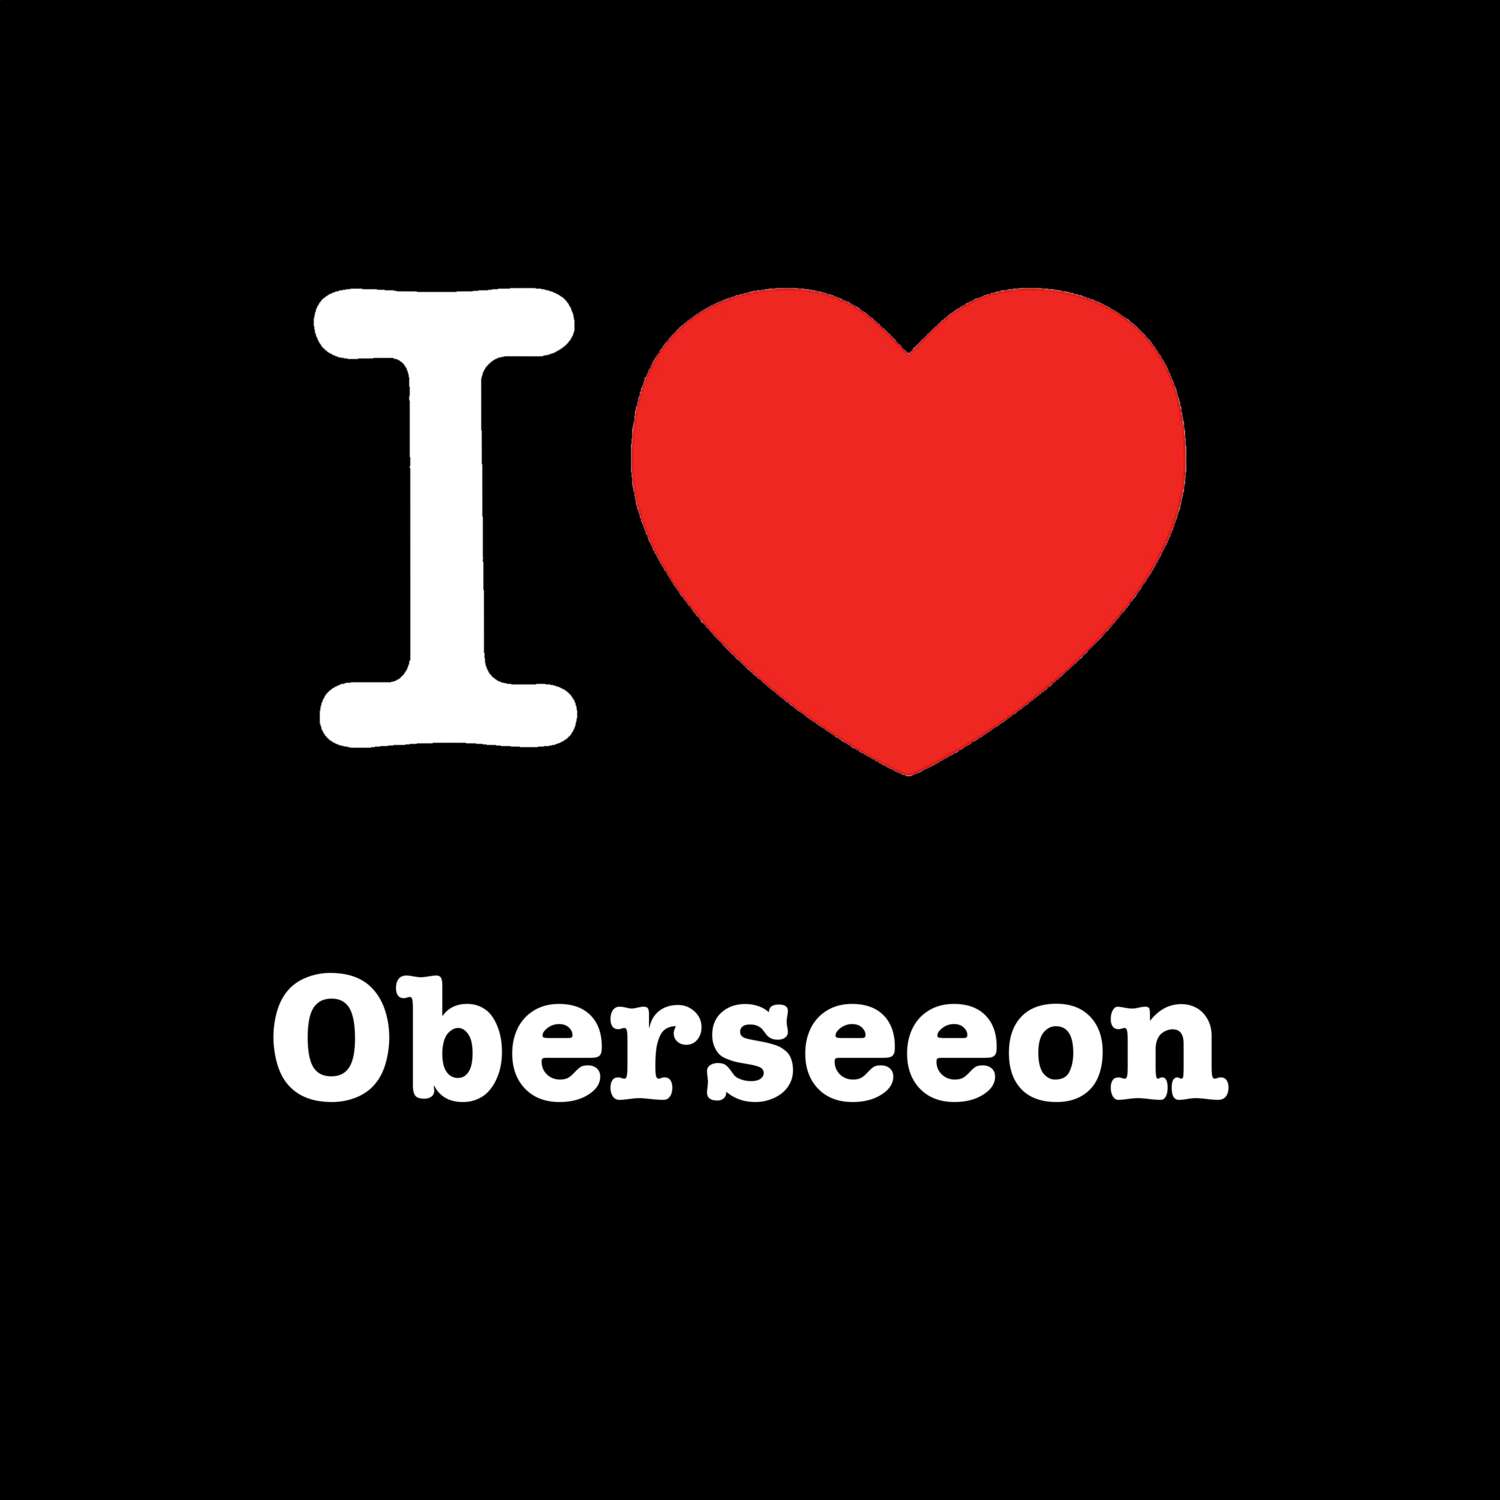 Oberseeon T-Shirt »I love«